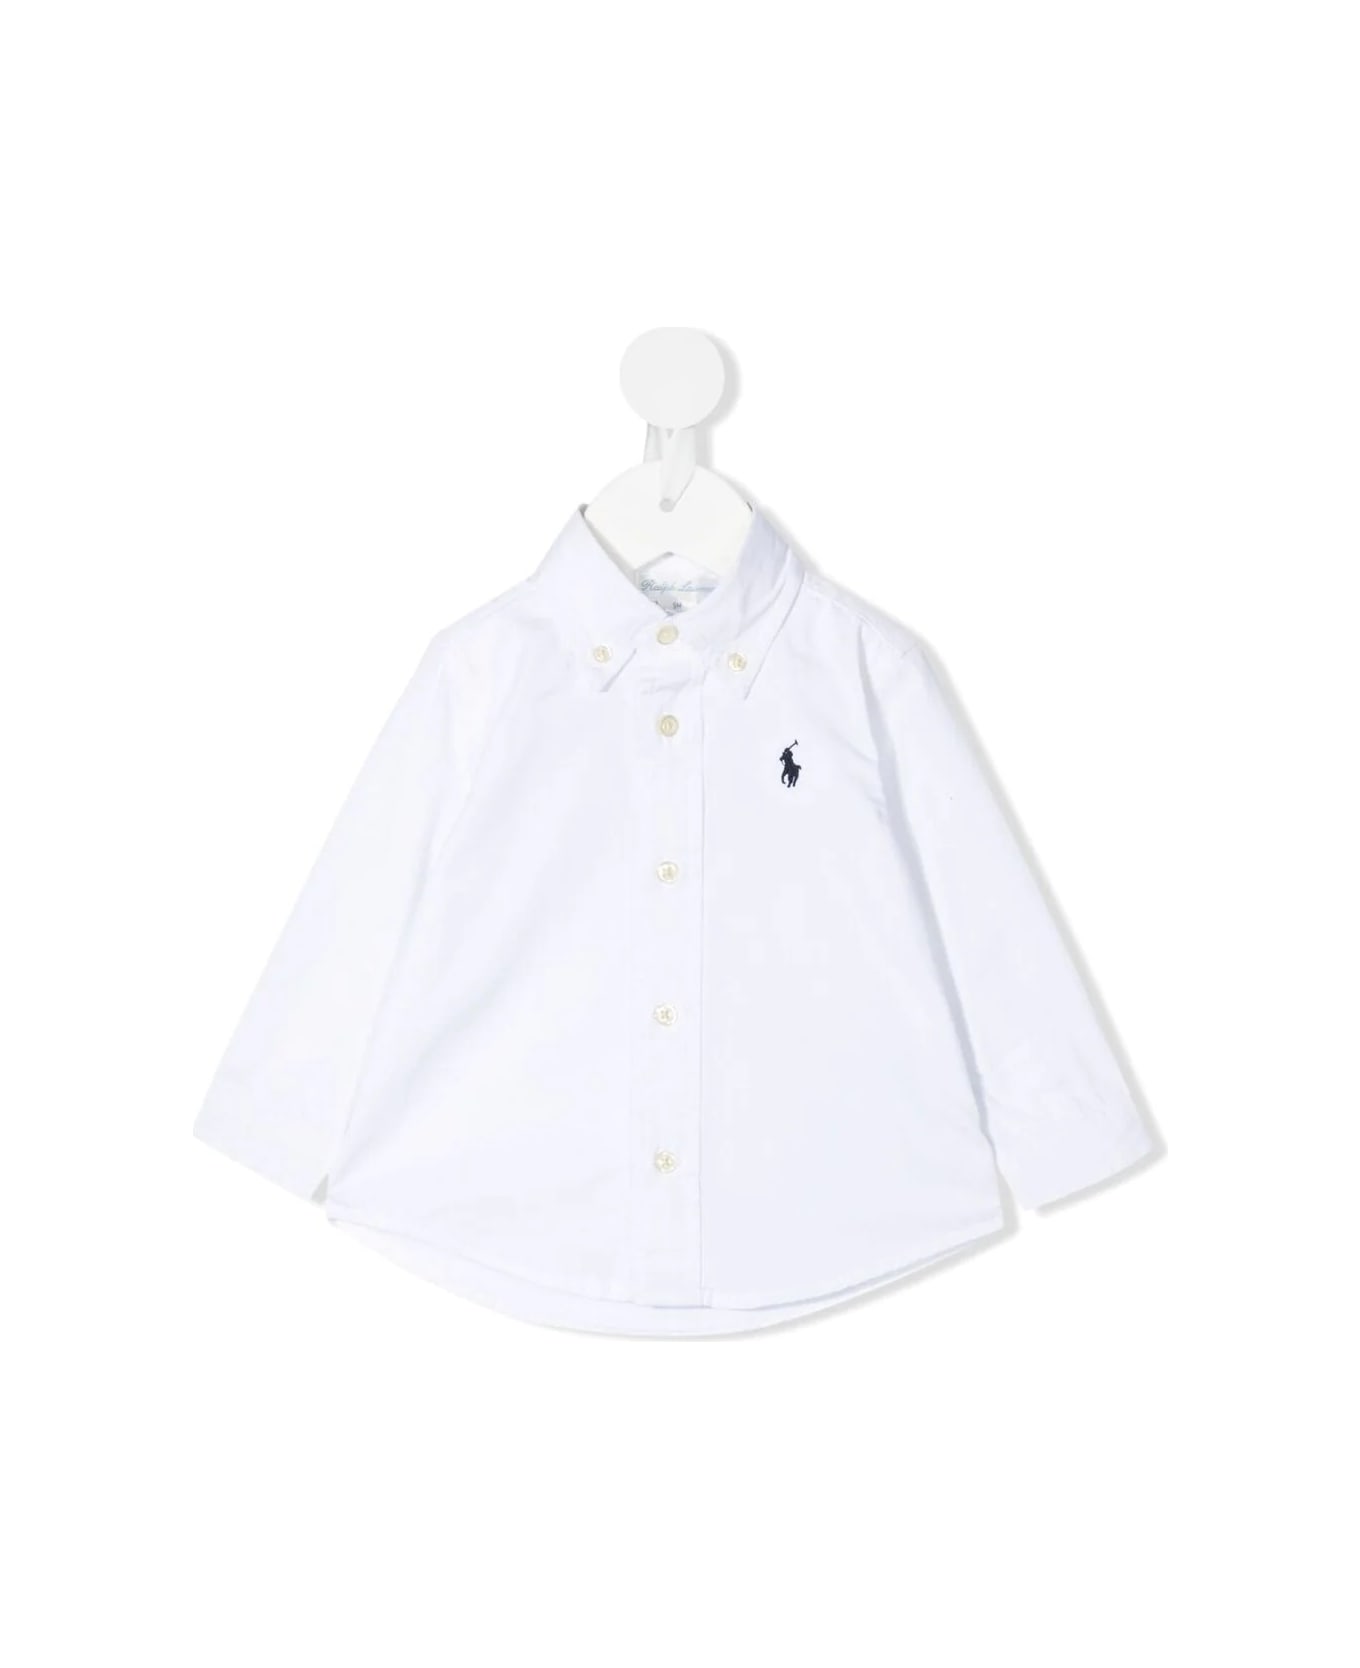 Ralph Lauren White Slim-fit Oxford Shirt - White